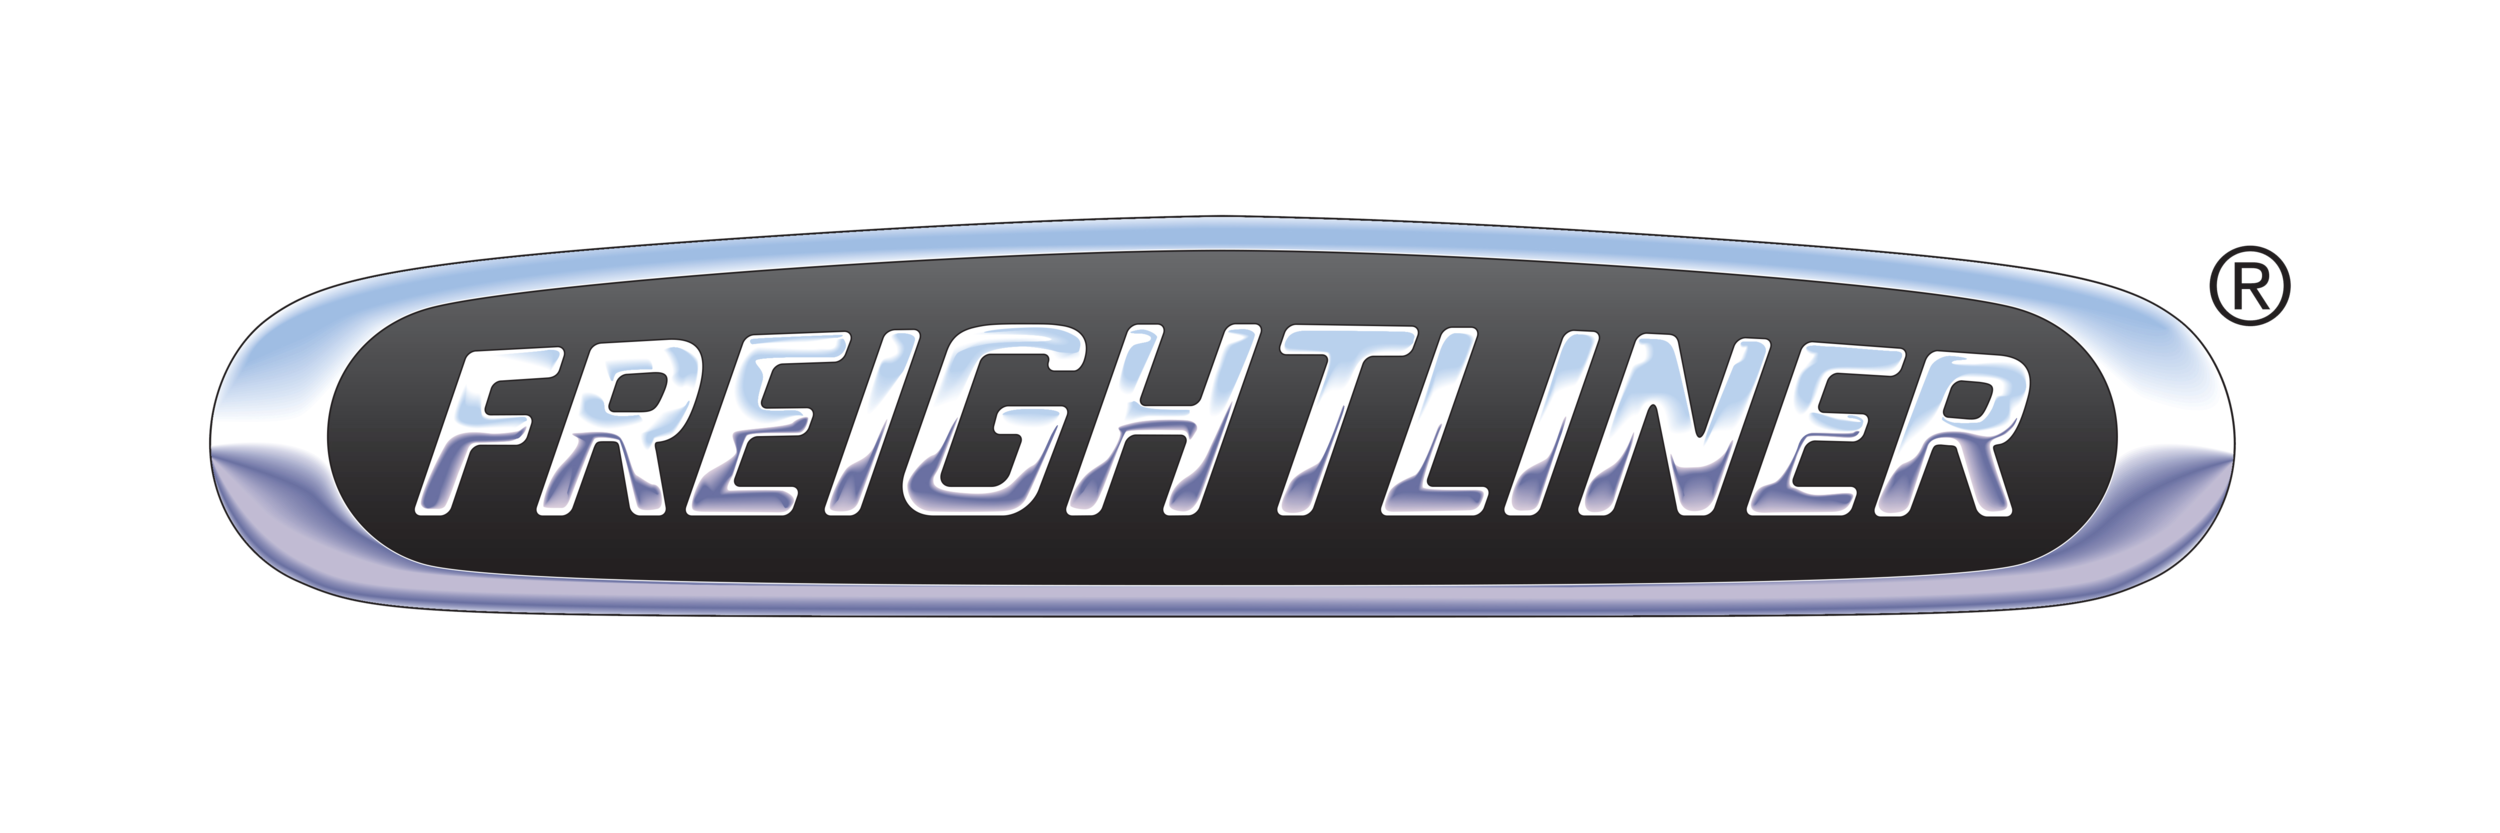 Freightliner-logo-6000x2000.png